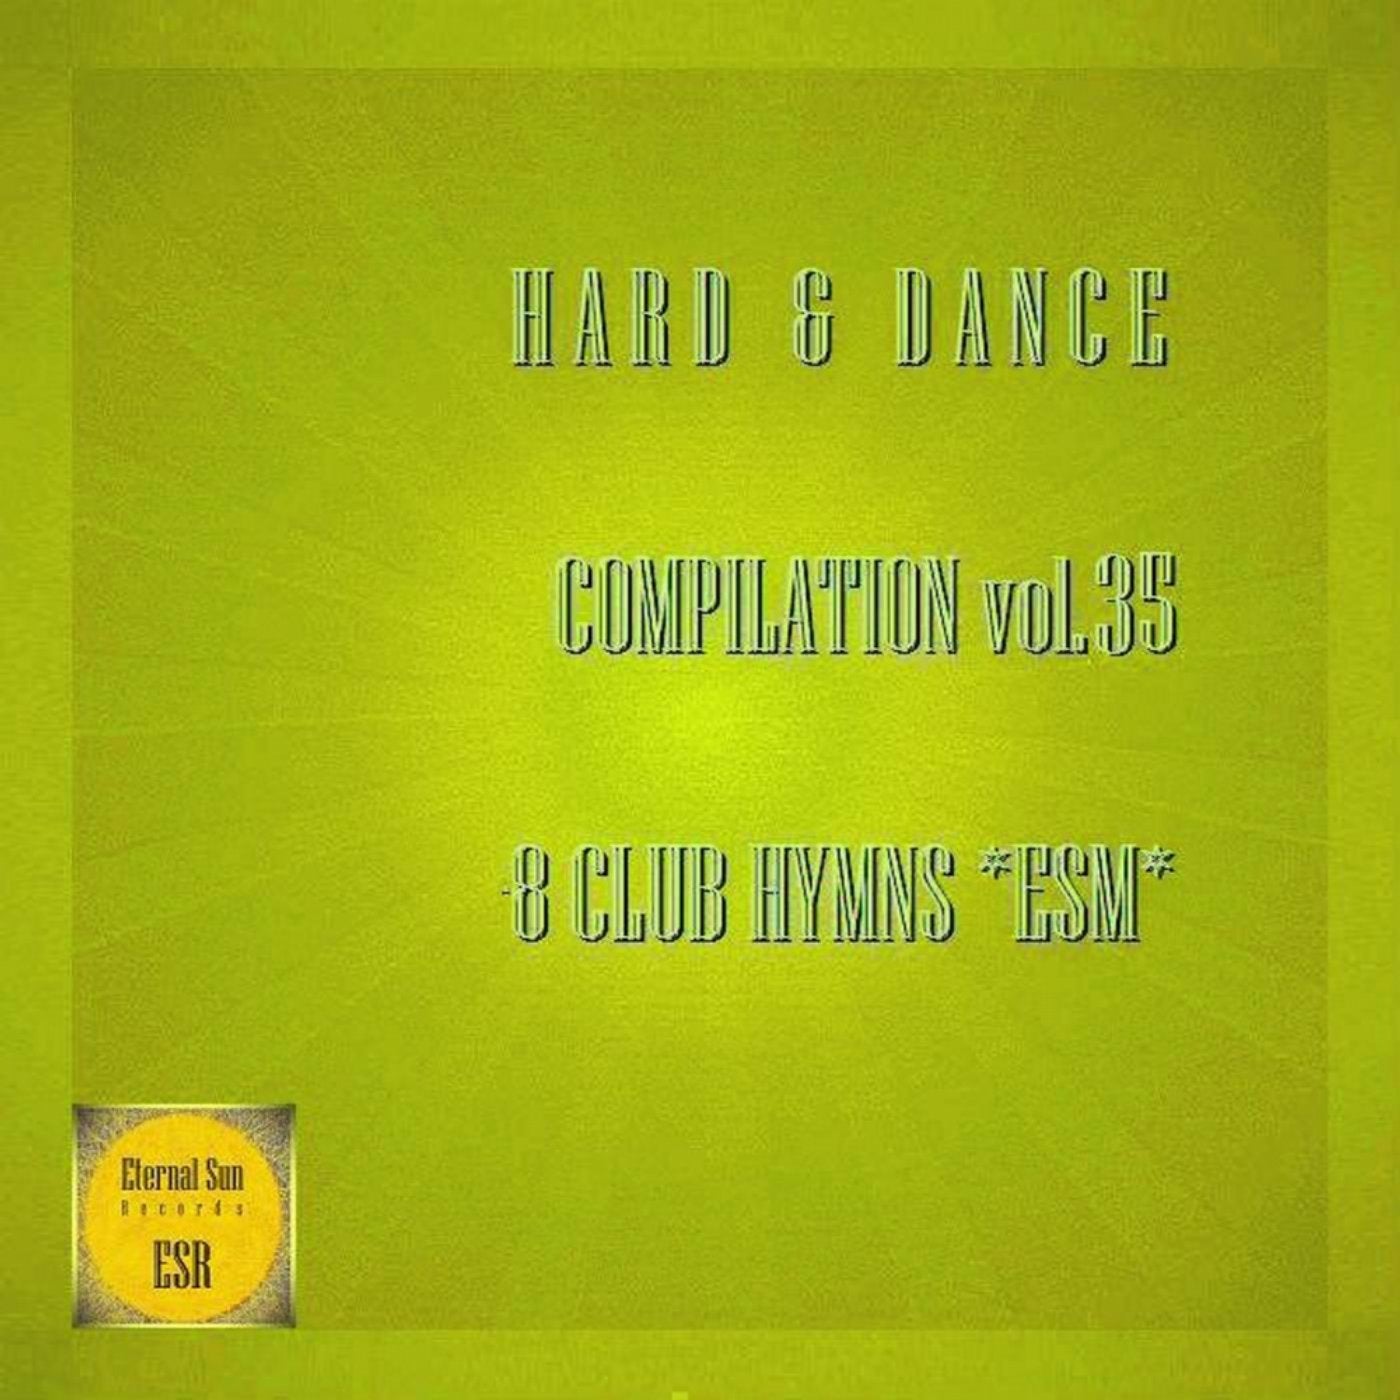 Hard & Dance Compilation, Vol. 35: 8 Club Hymns ESM